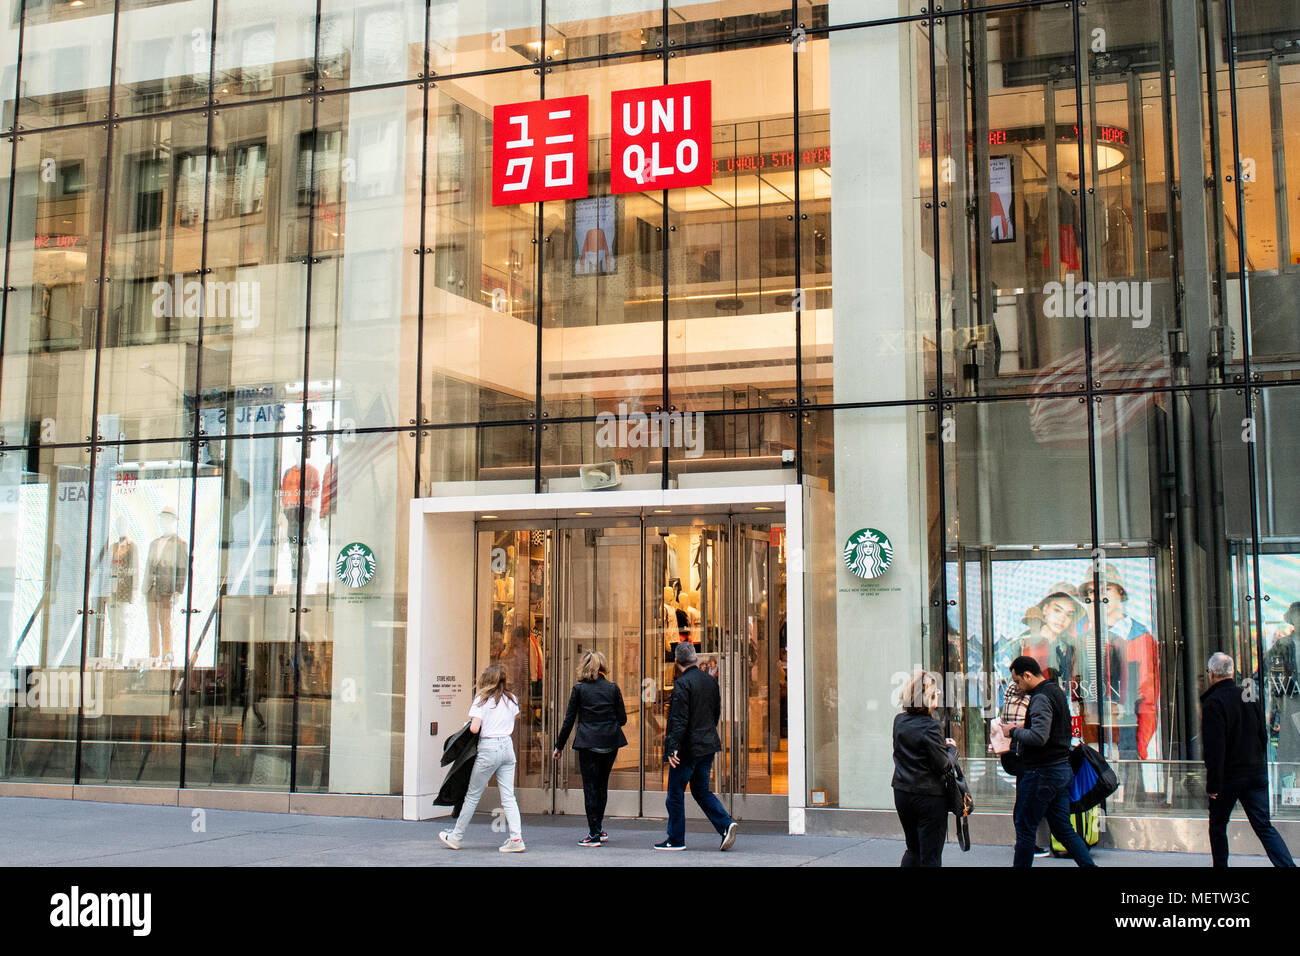 Uniqlo store on Fifth Avenue in New York City Stock Photo - Alamy